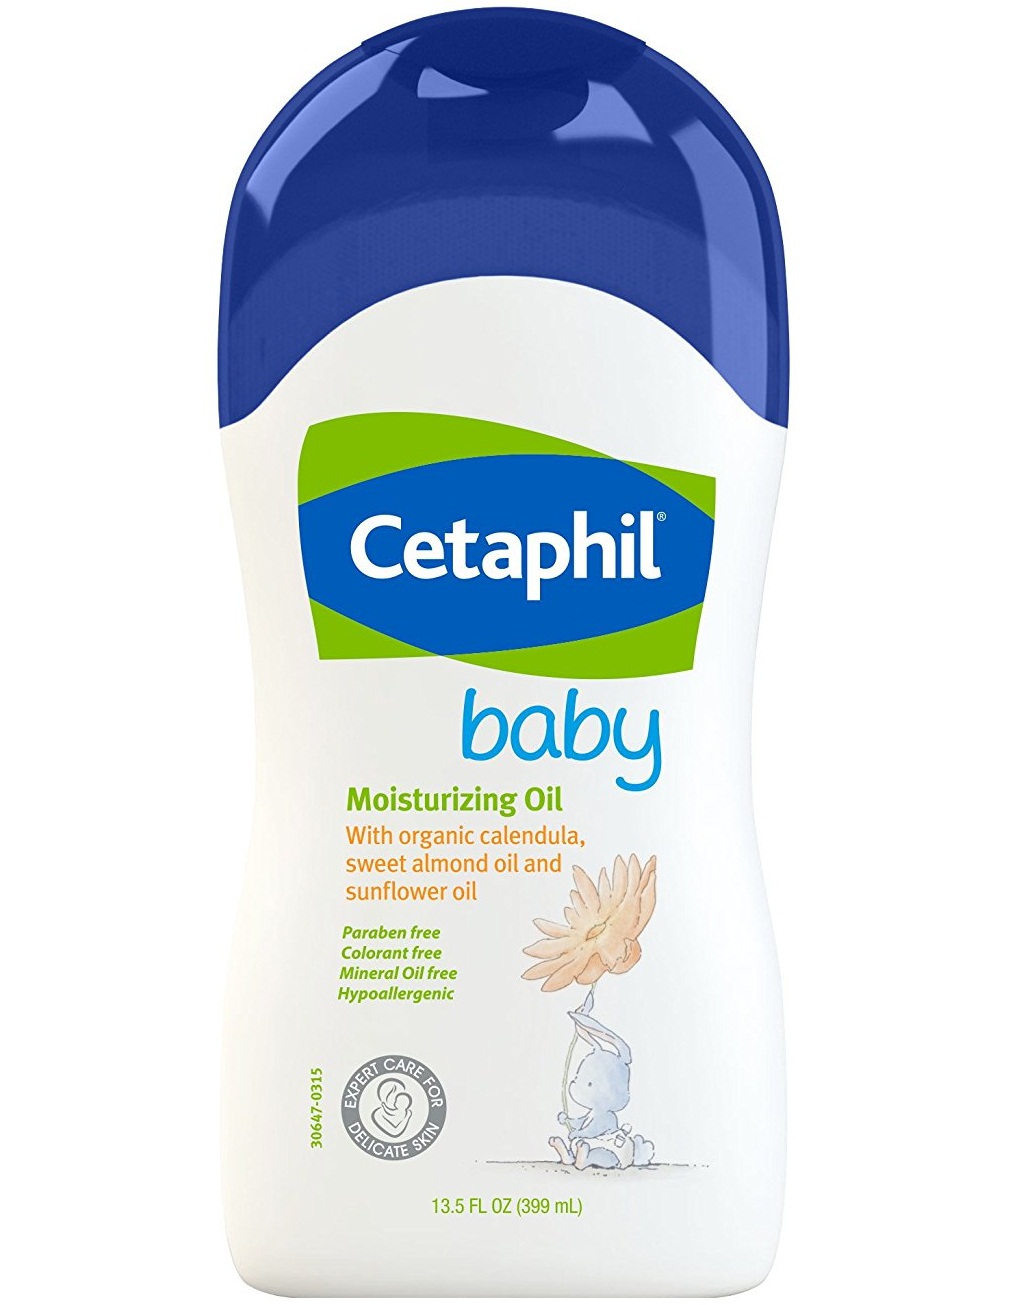 dau-duong-am-cho-be-cetaphil-baby-moisturizing-oil-399ml-1